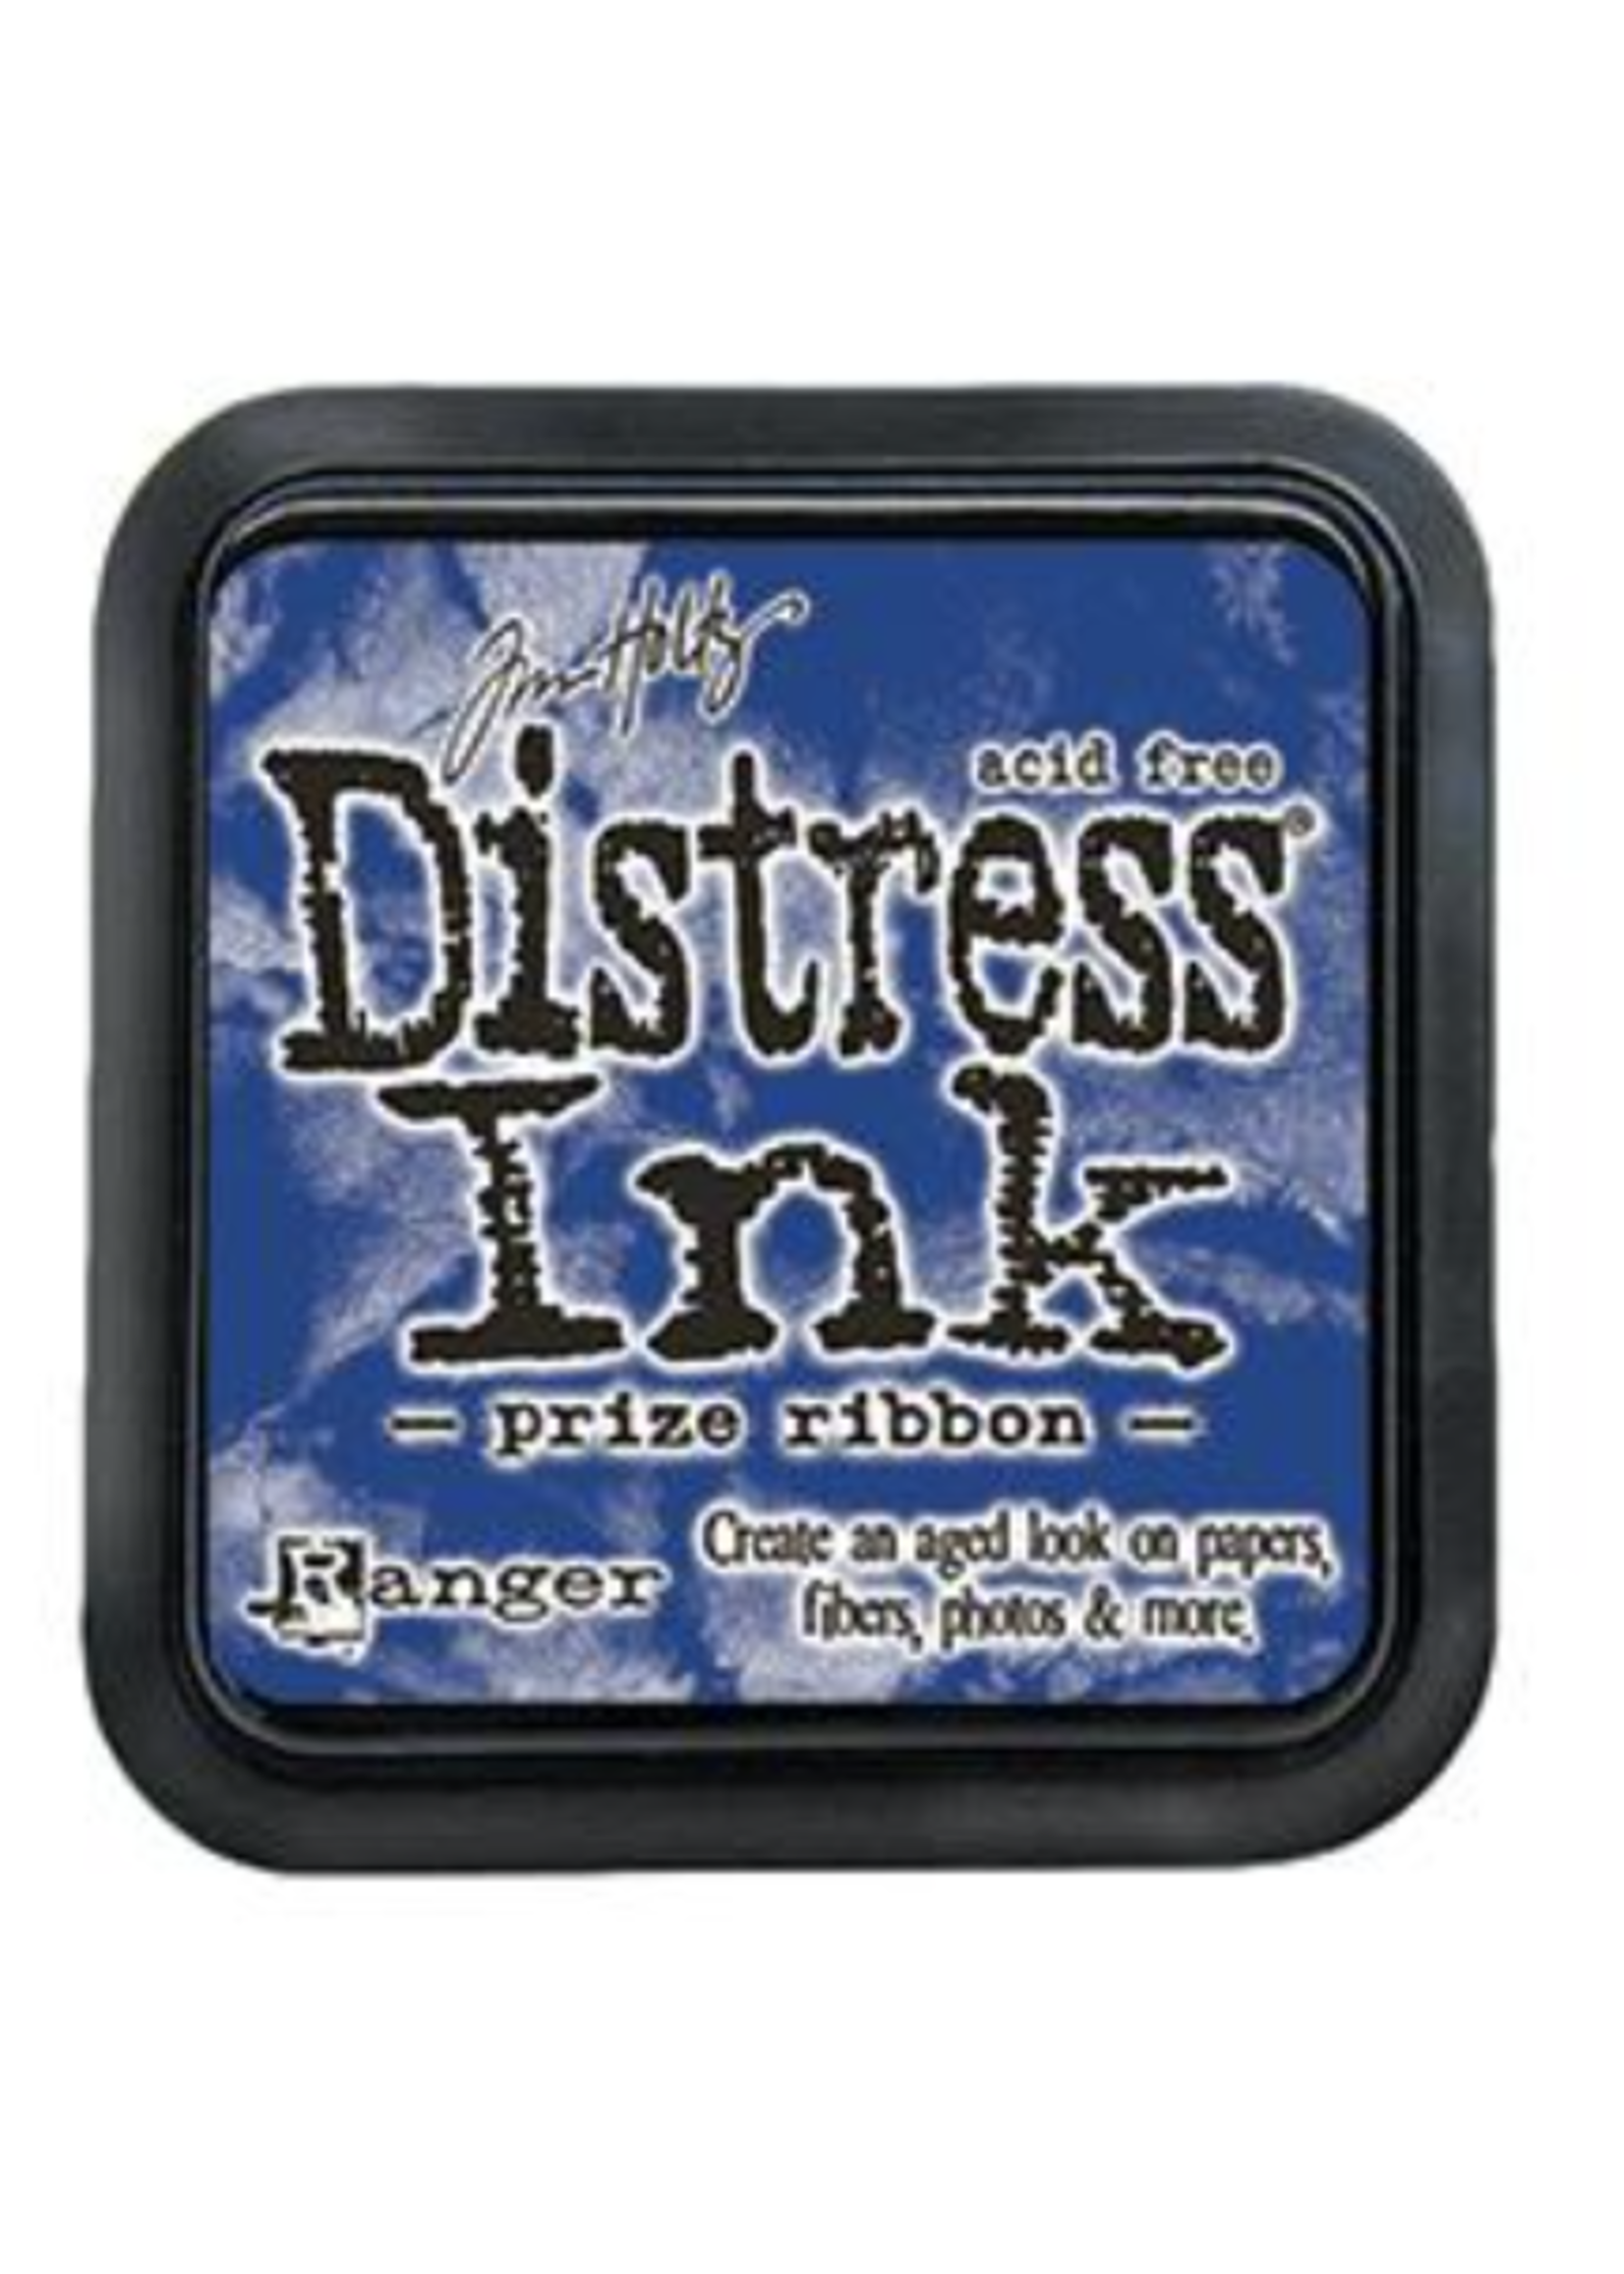 RANGER Distress Ink Pad Prize Ribbon